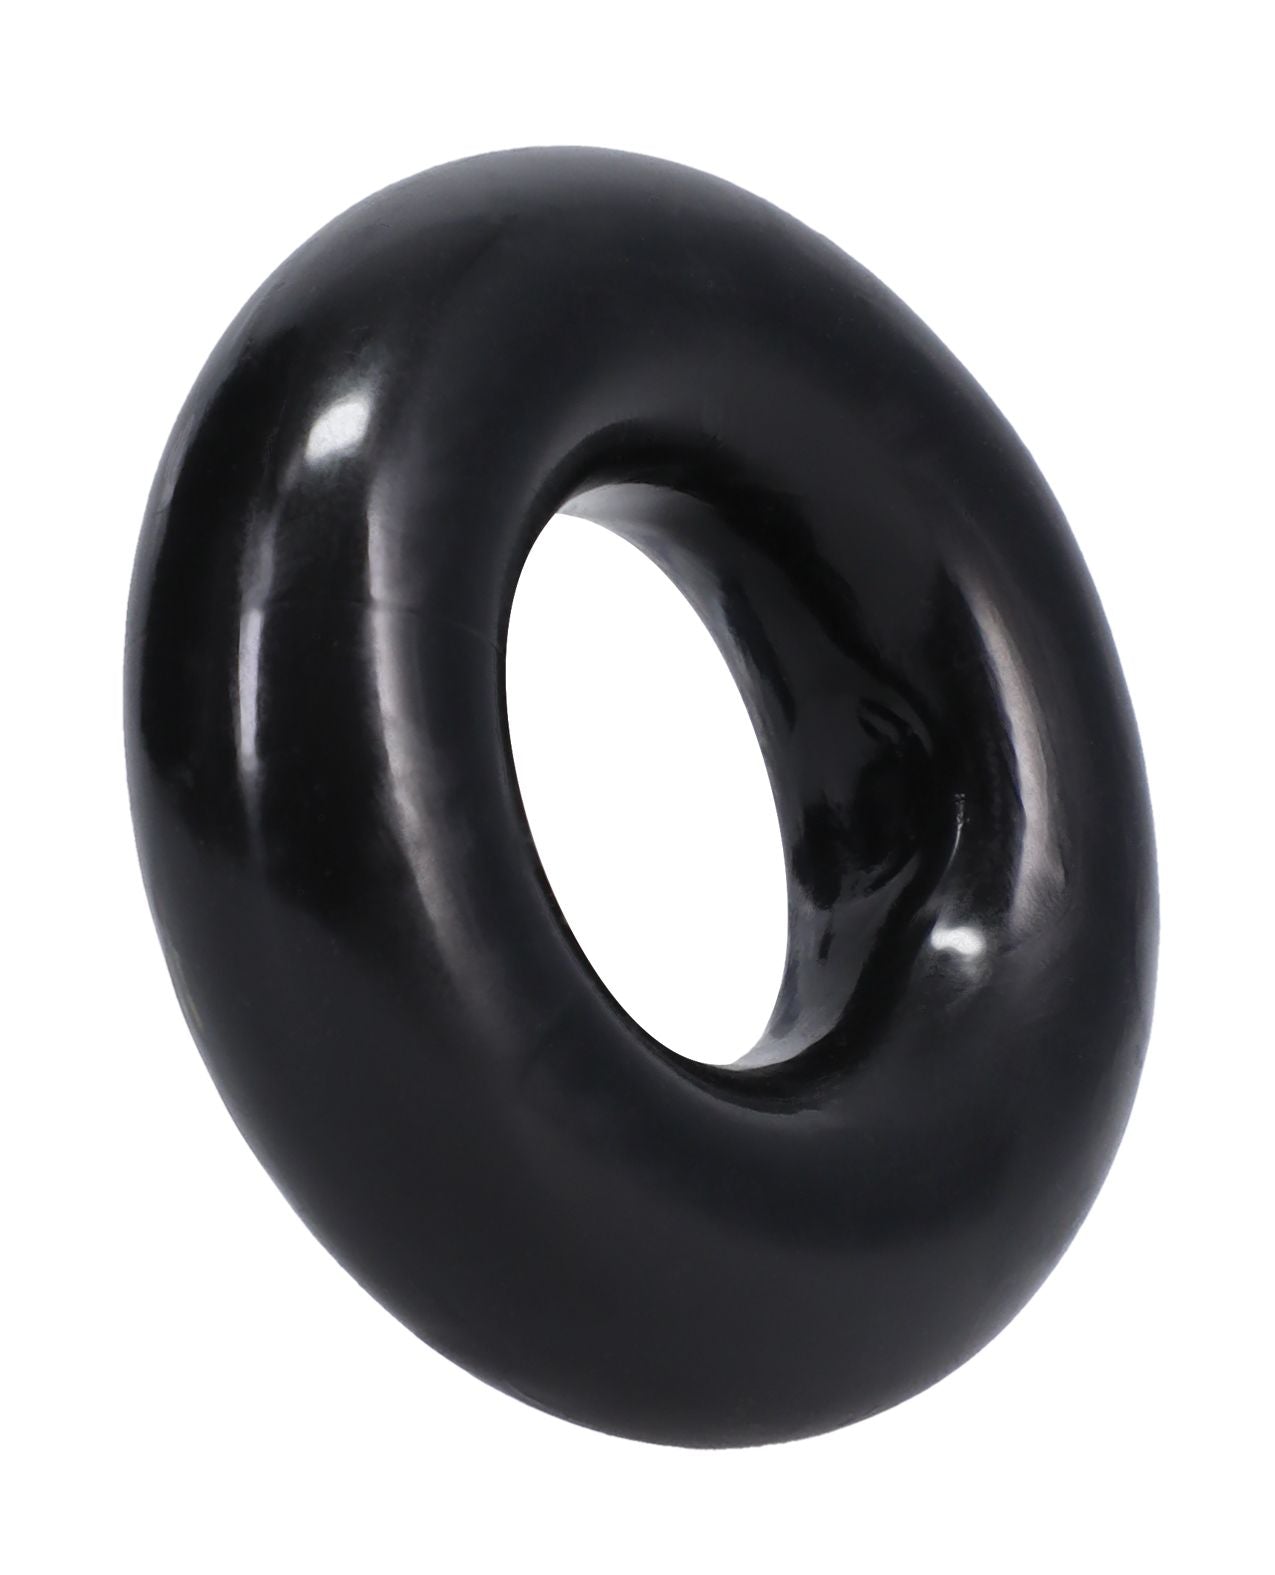 Rock Solid 3" Black Donut Ring Shipmysextoys